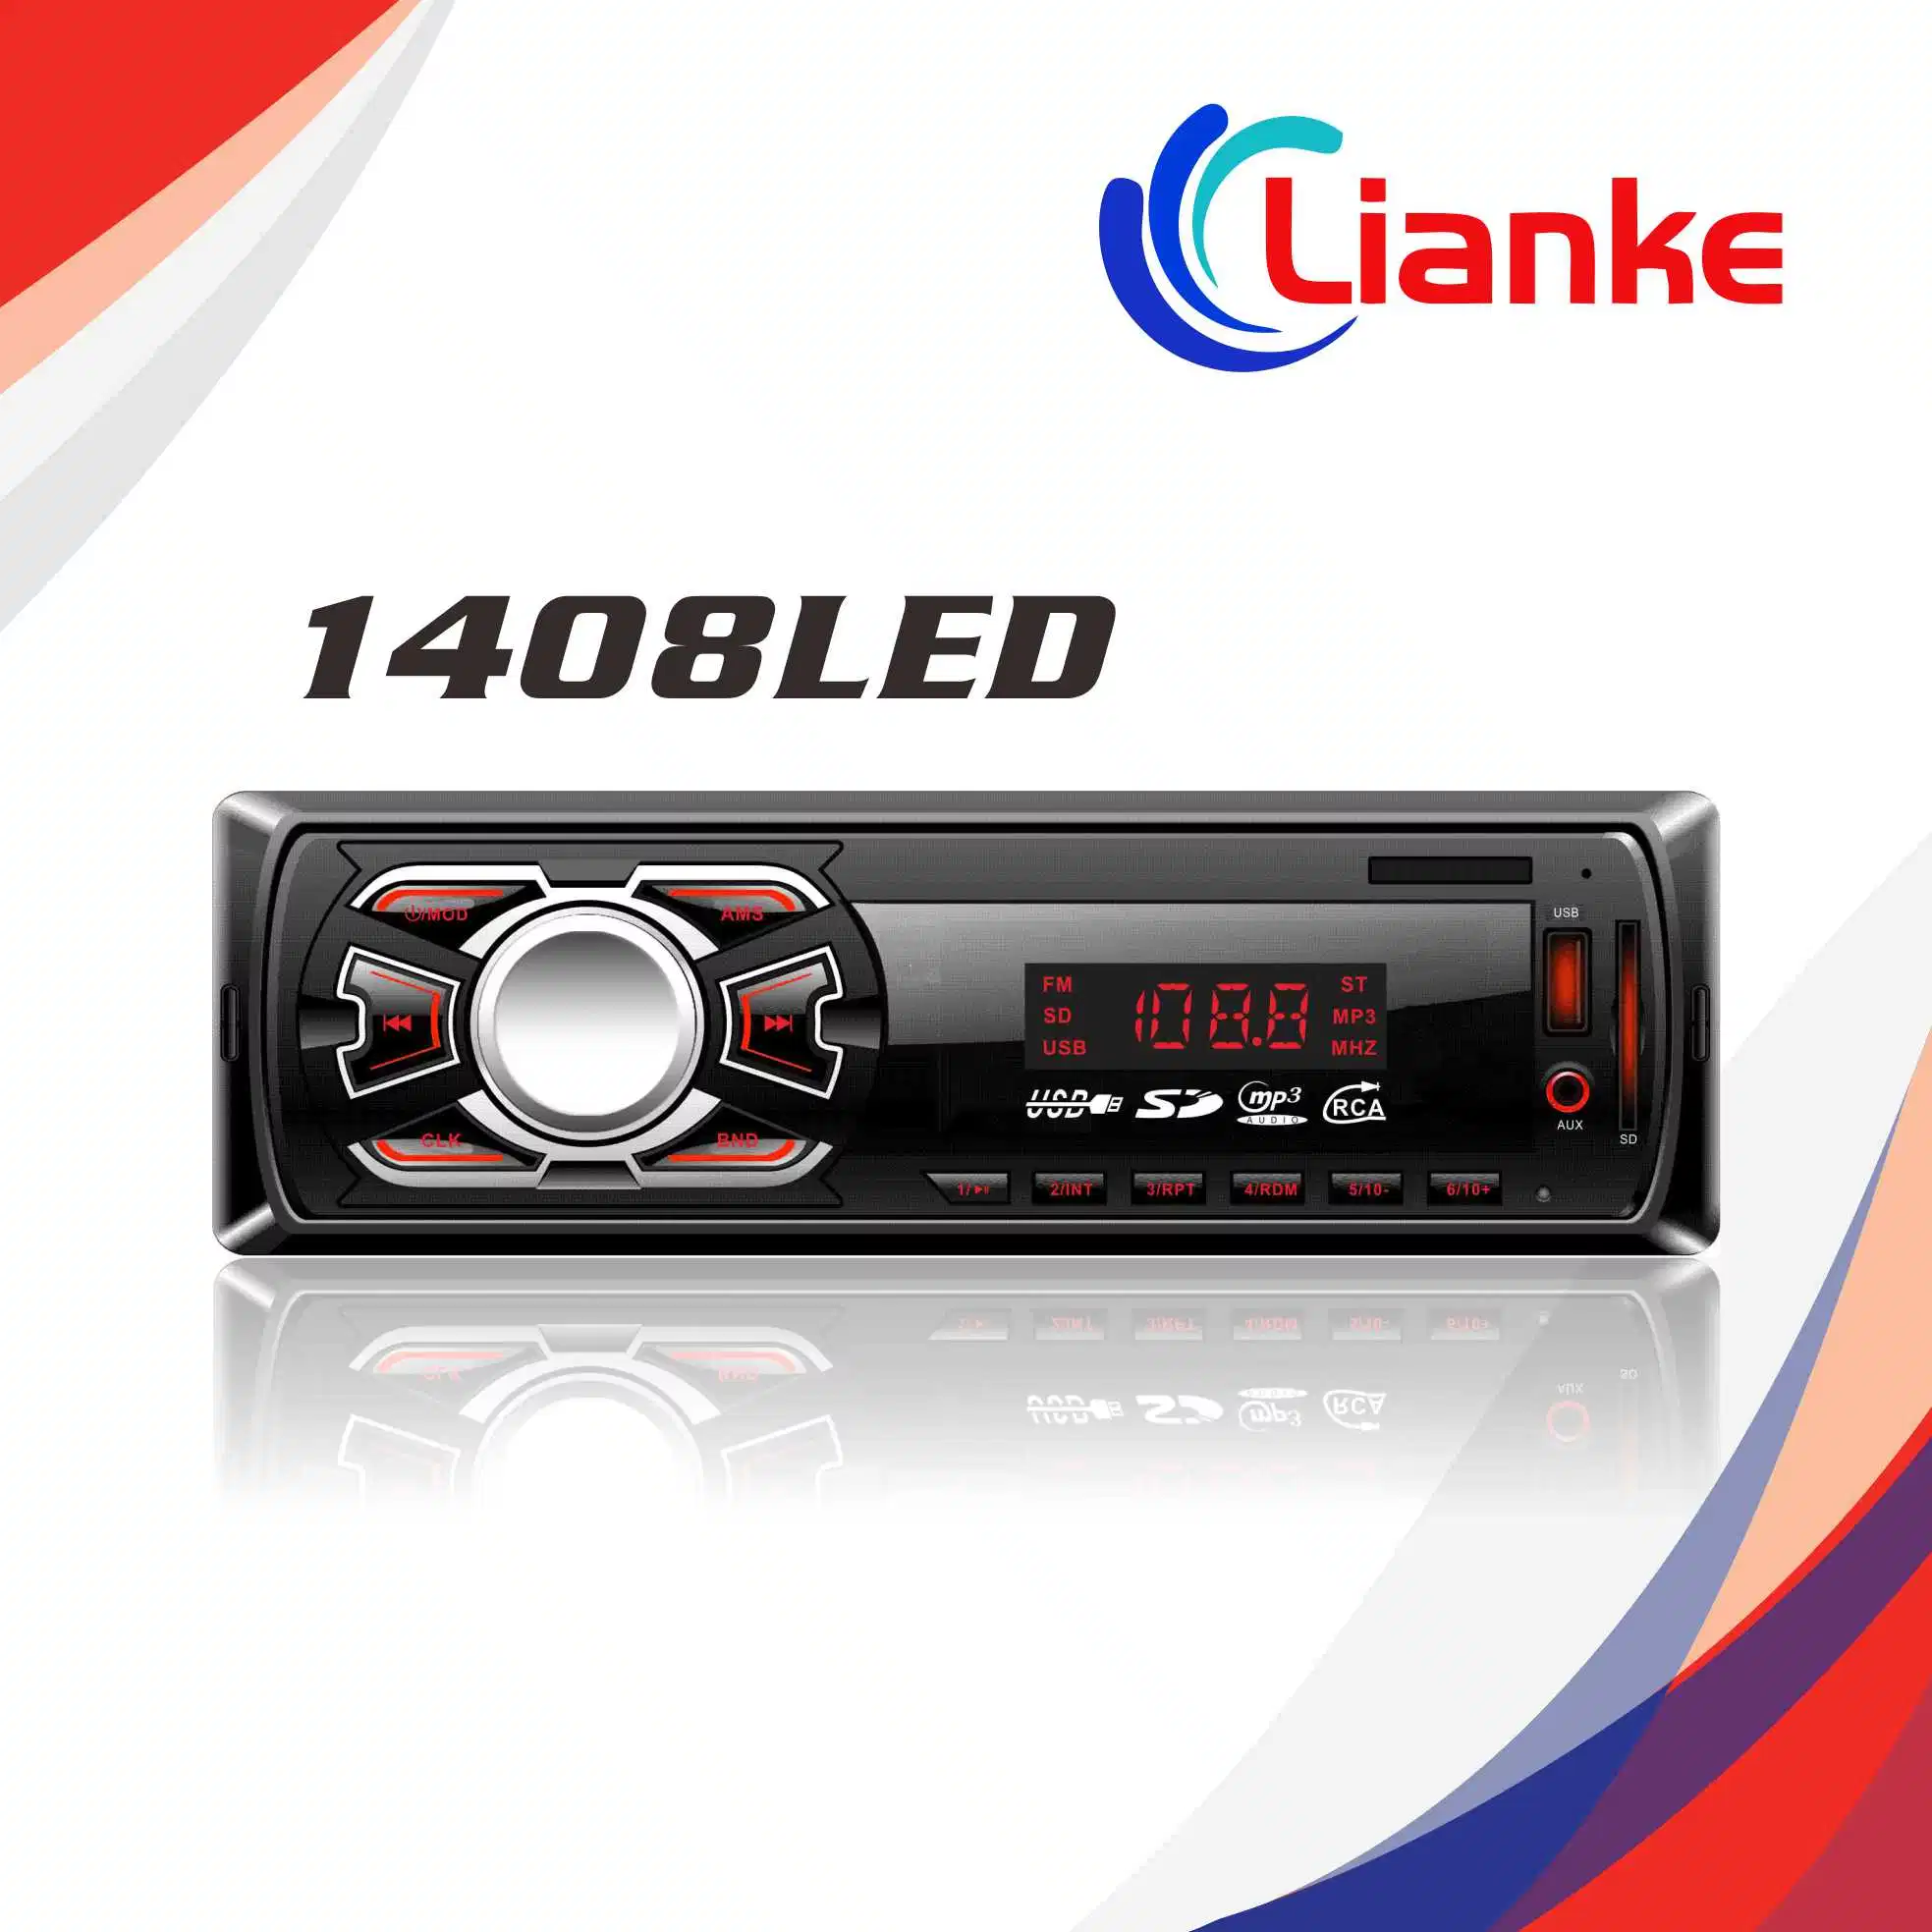 Ecrã LED Car Electrical 1 DIN MP3 sistema de leitor de áudio Rádio/1408LED